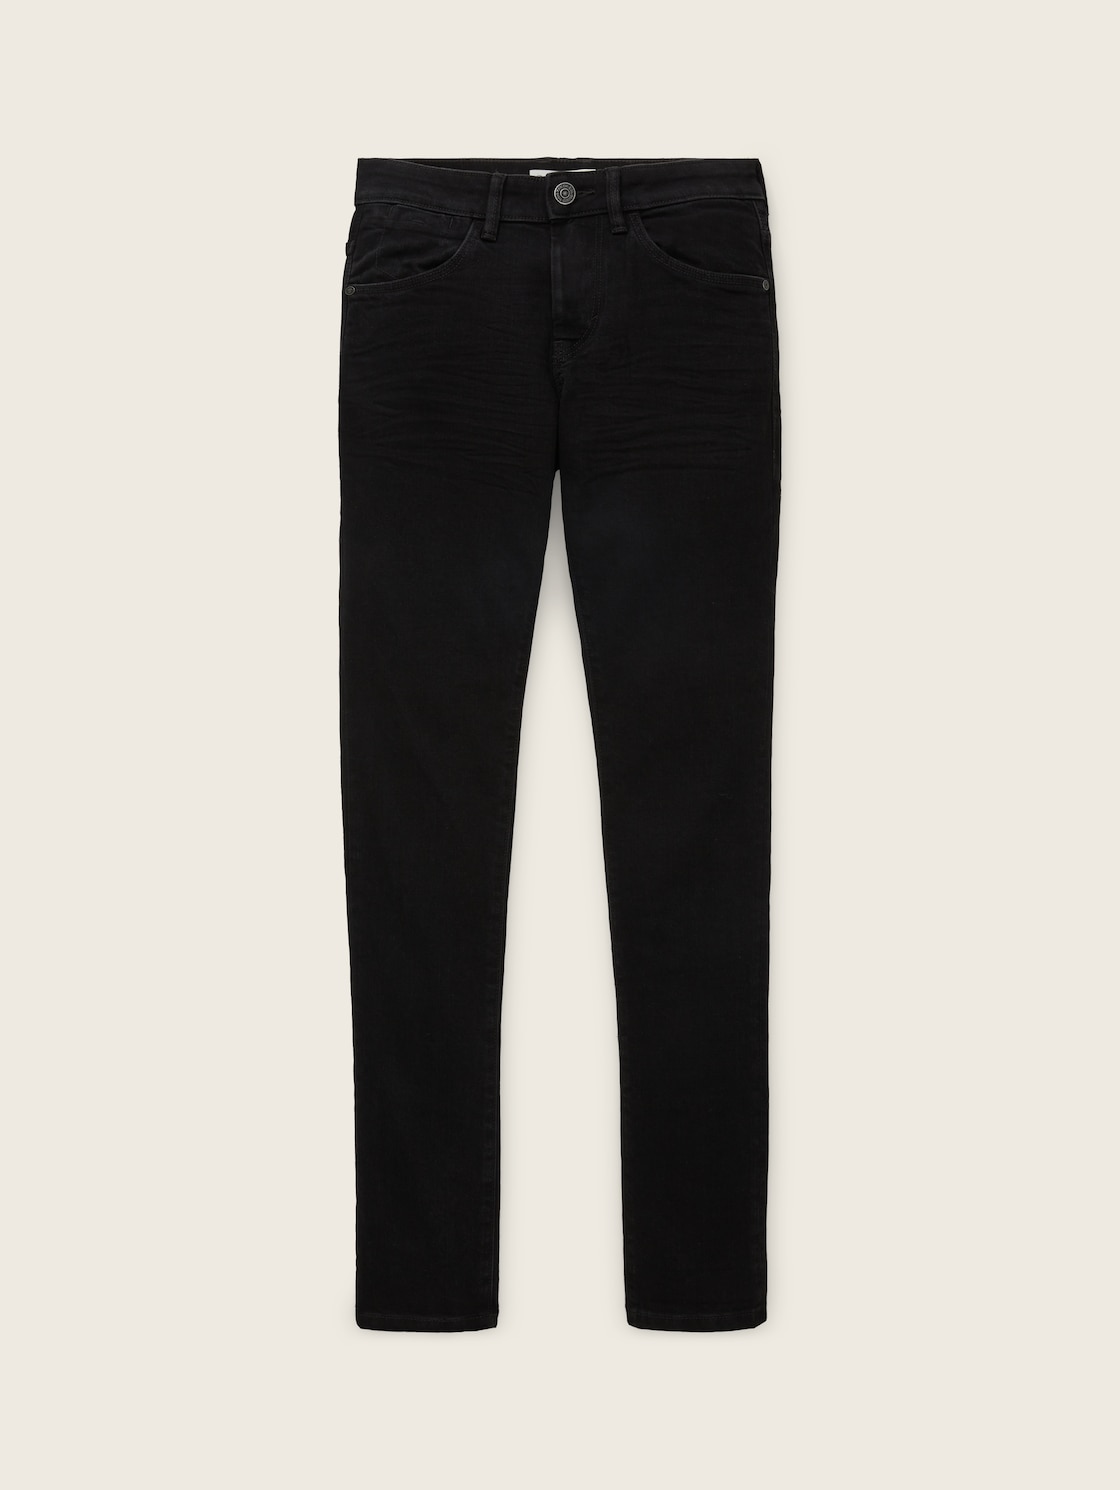 TOM TAILOR Herren Troy Slim Jeans, schwarz, Logo Print, Gr. 40/32 von Tom Tailor